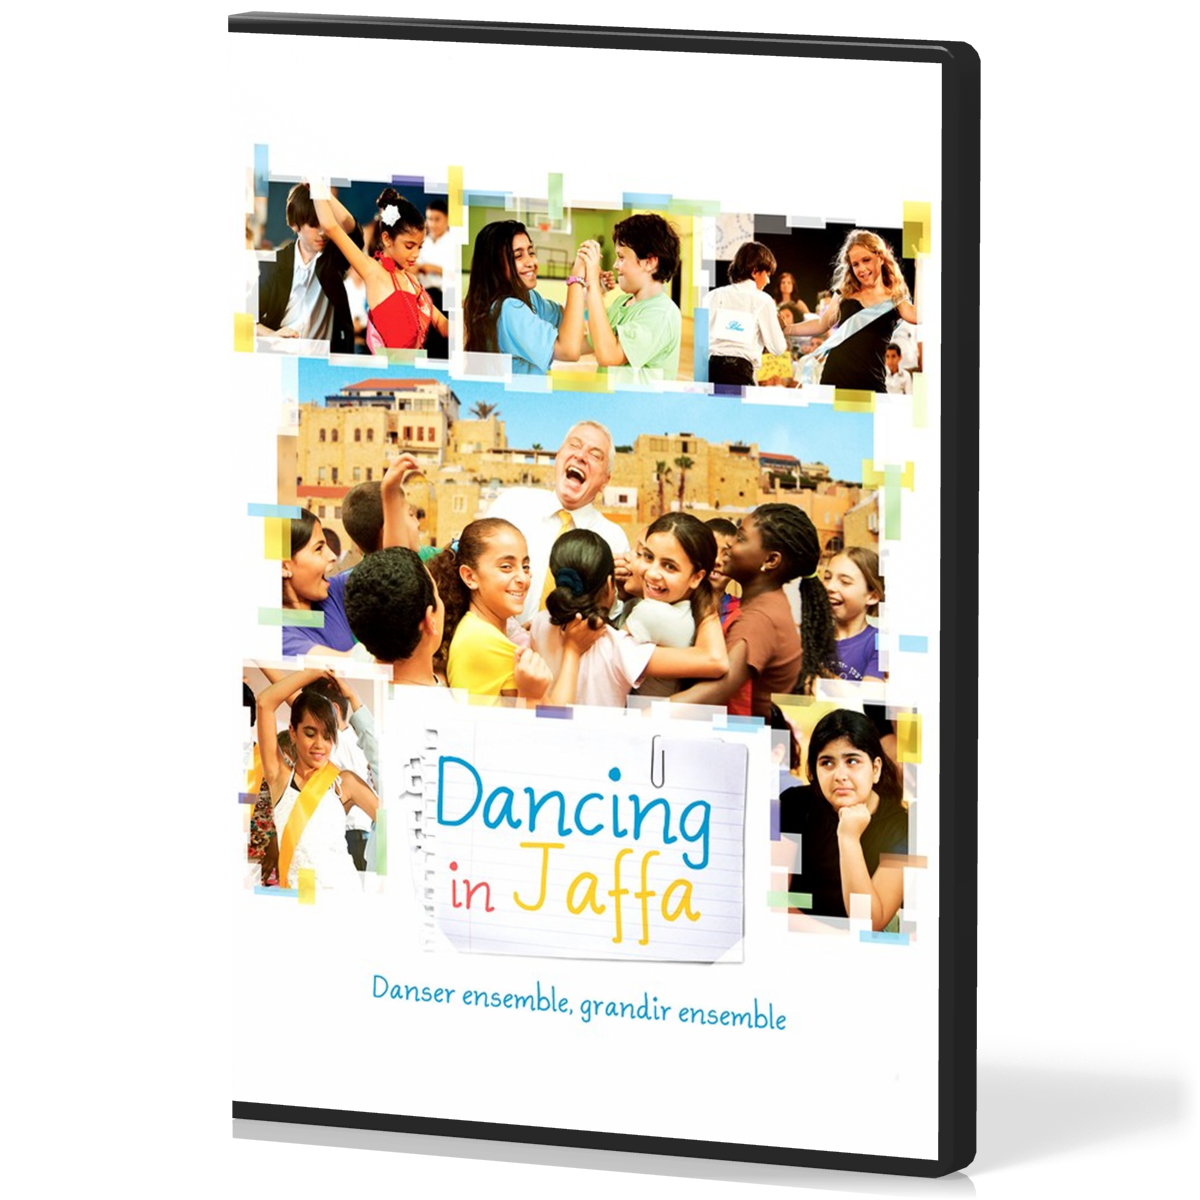 DANCING IN JAFFA - DVD (2014) SOUS TITRè FRANçAIS